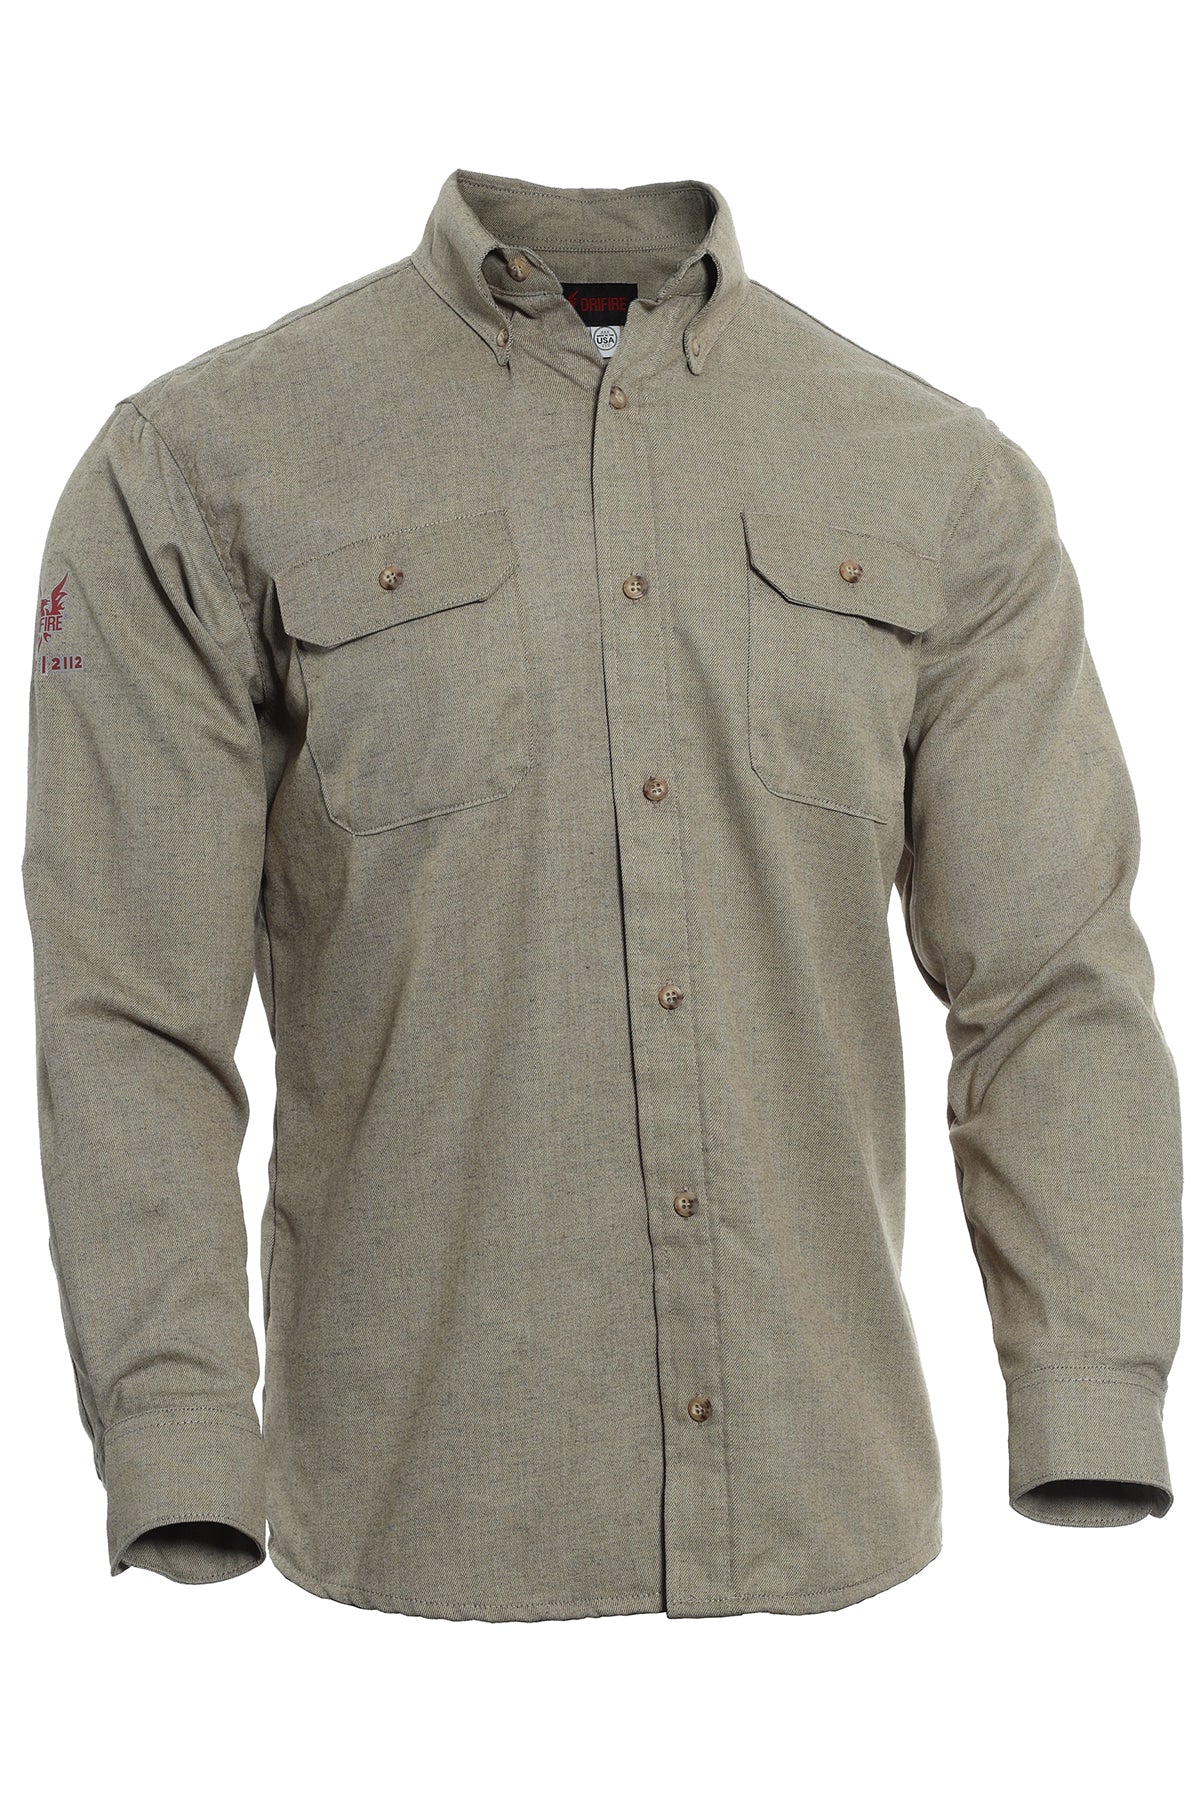 DRIFIRE TECGEN FR Work Shirt - TCG011502